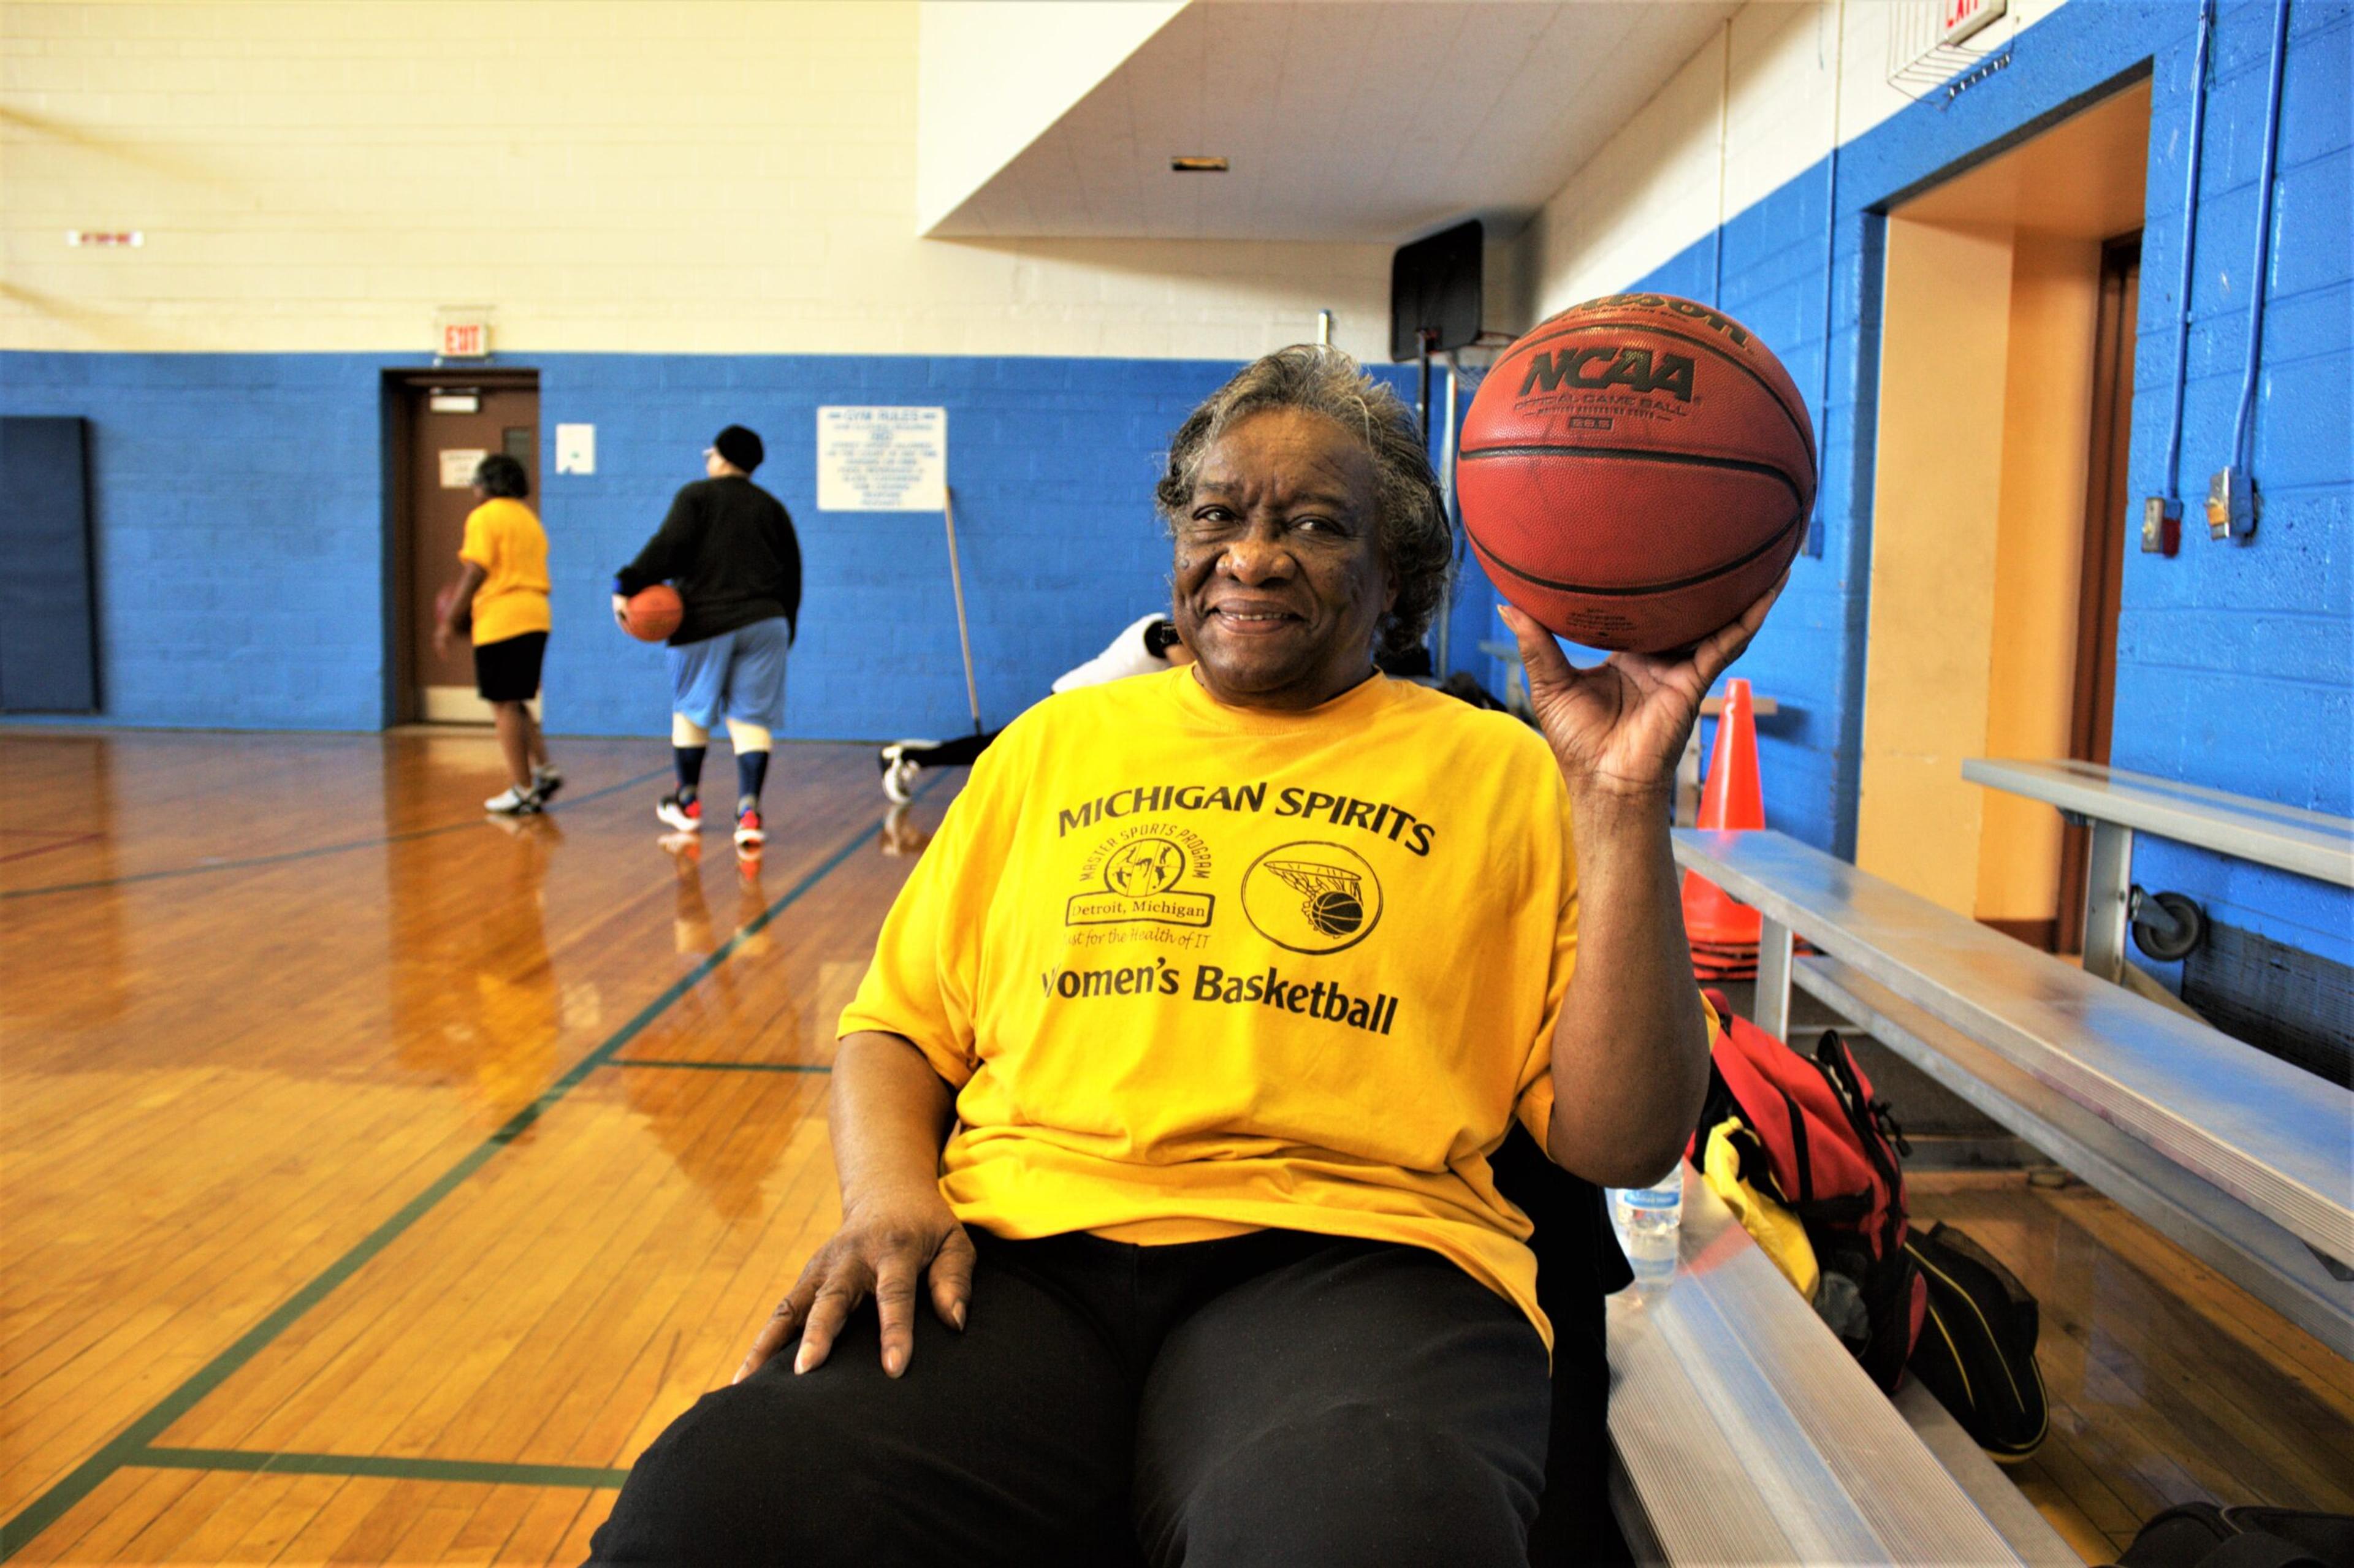 Edna Jones Allen, 81, of Detroit, poses for a photo at the Lasky Recreation Center. She co-founded the Michigan Spirits senior women's basketball team.